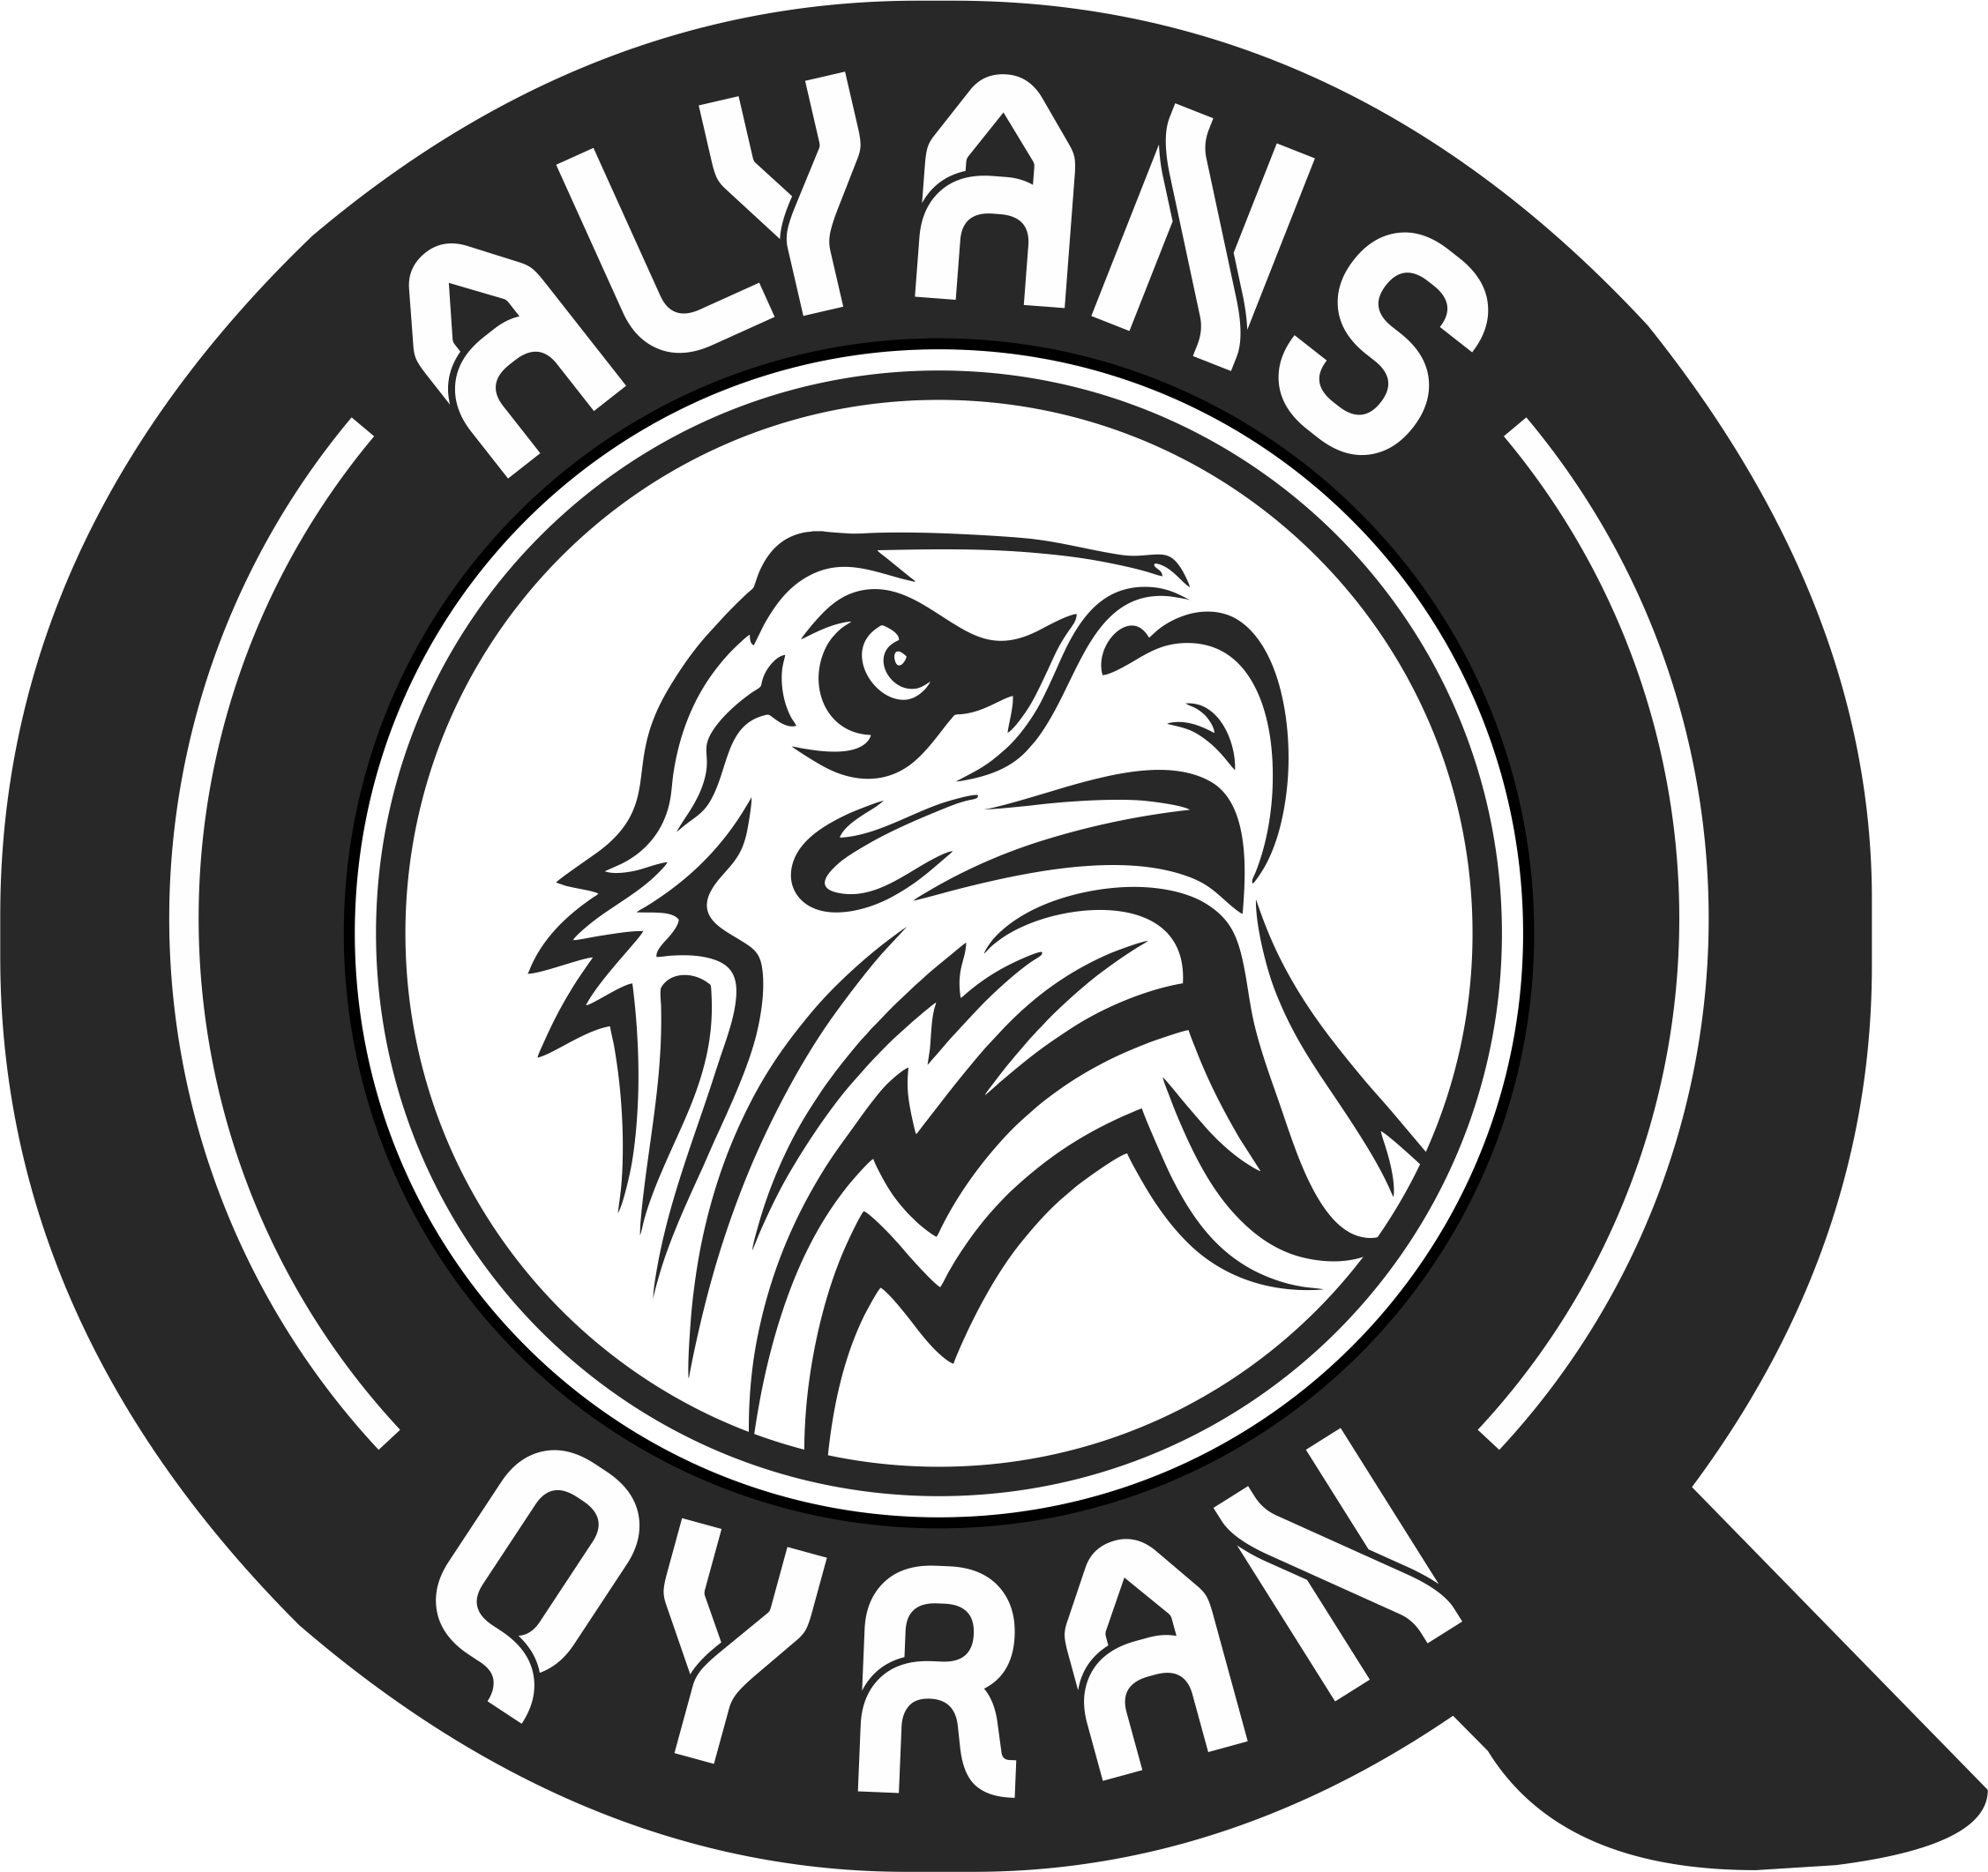 Alyans Qyran